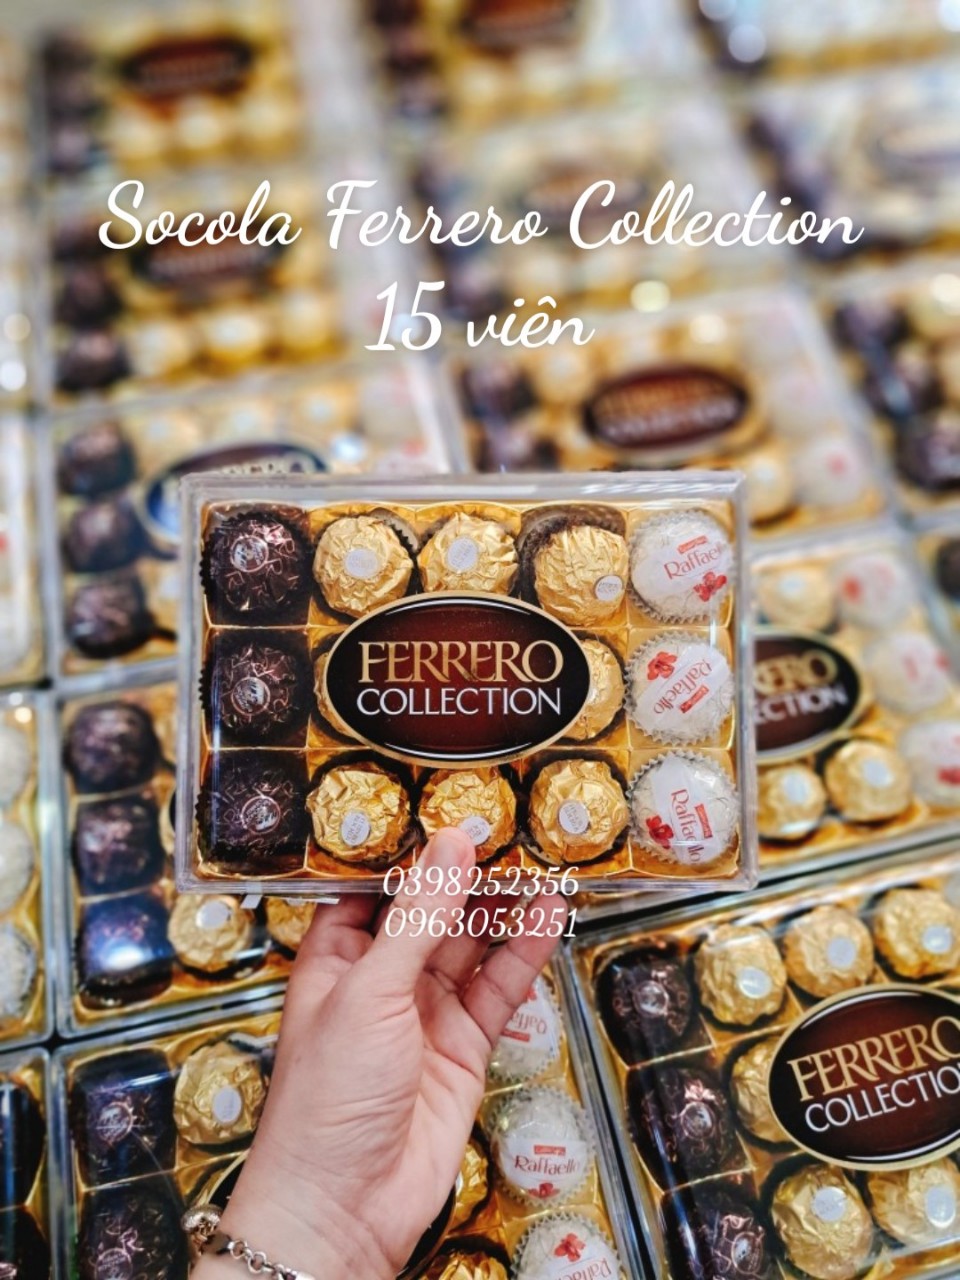 Socola Ferrero Rocher Collection 172g ( 15 viên)